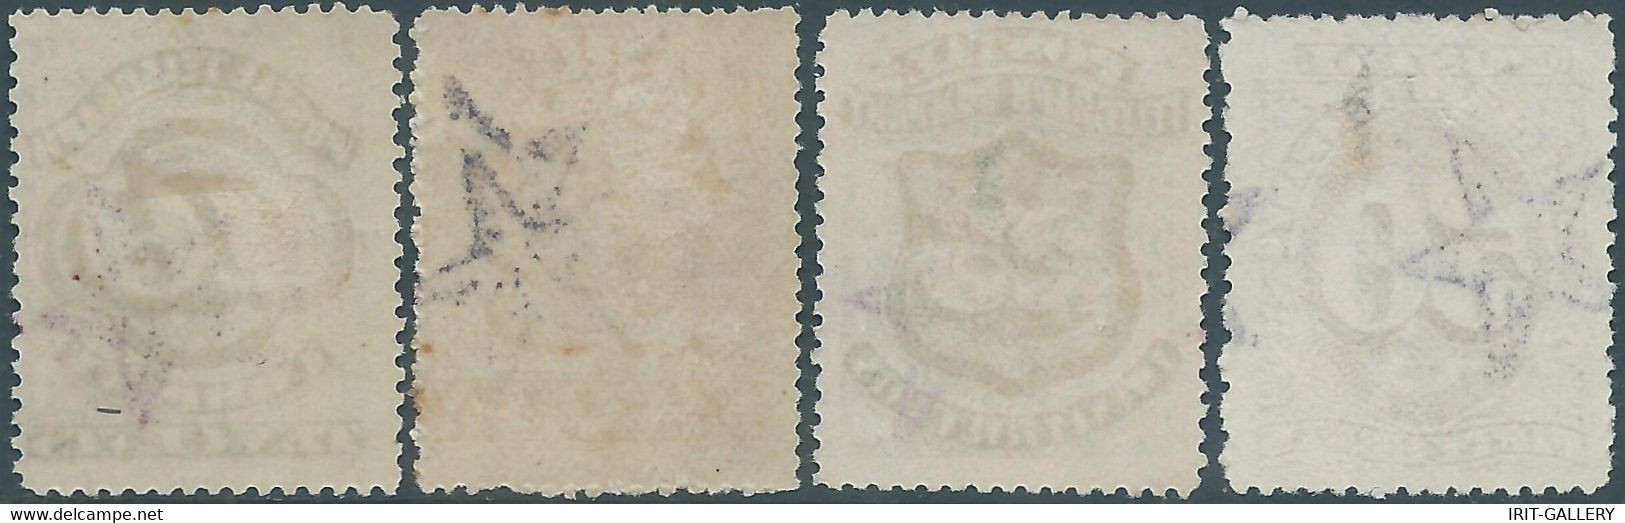 United States,U.S.A, 1885 Postal Telegraph Company,10c, 15c, 25c, And 50c - Mint - Telegraph Stamps